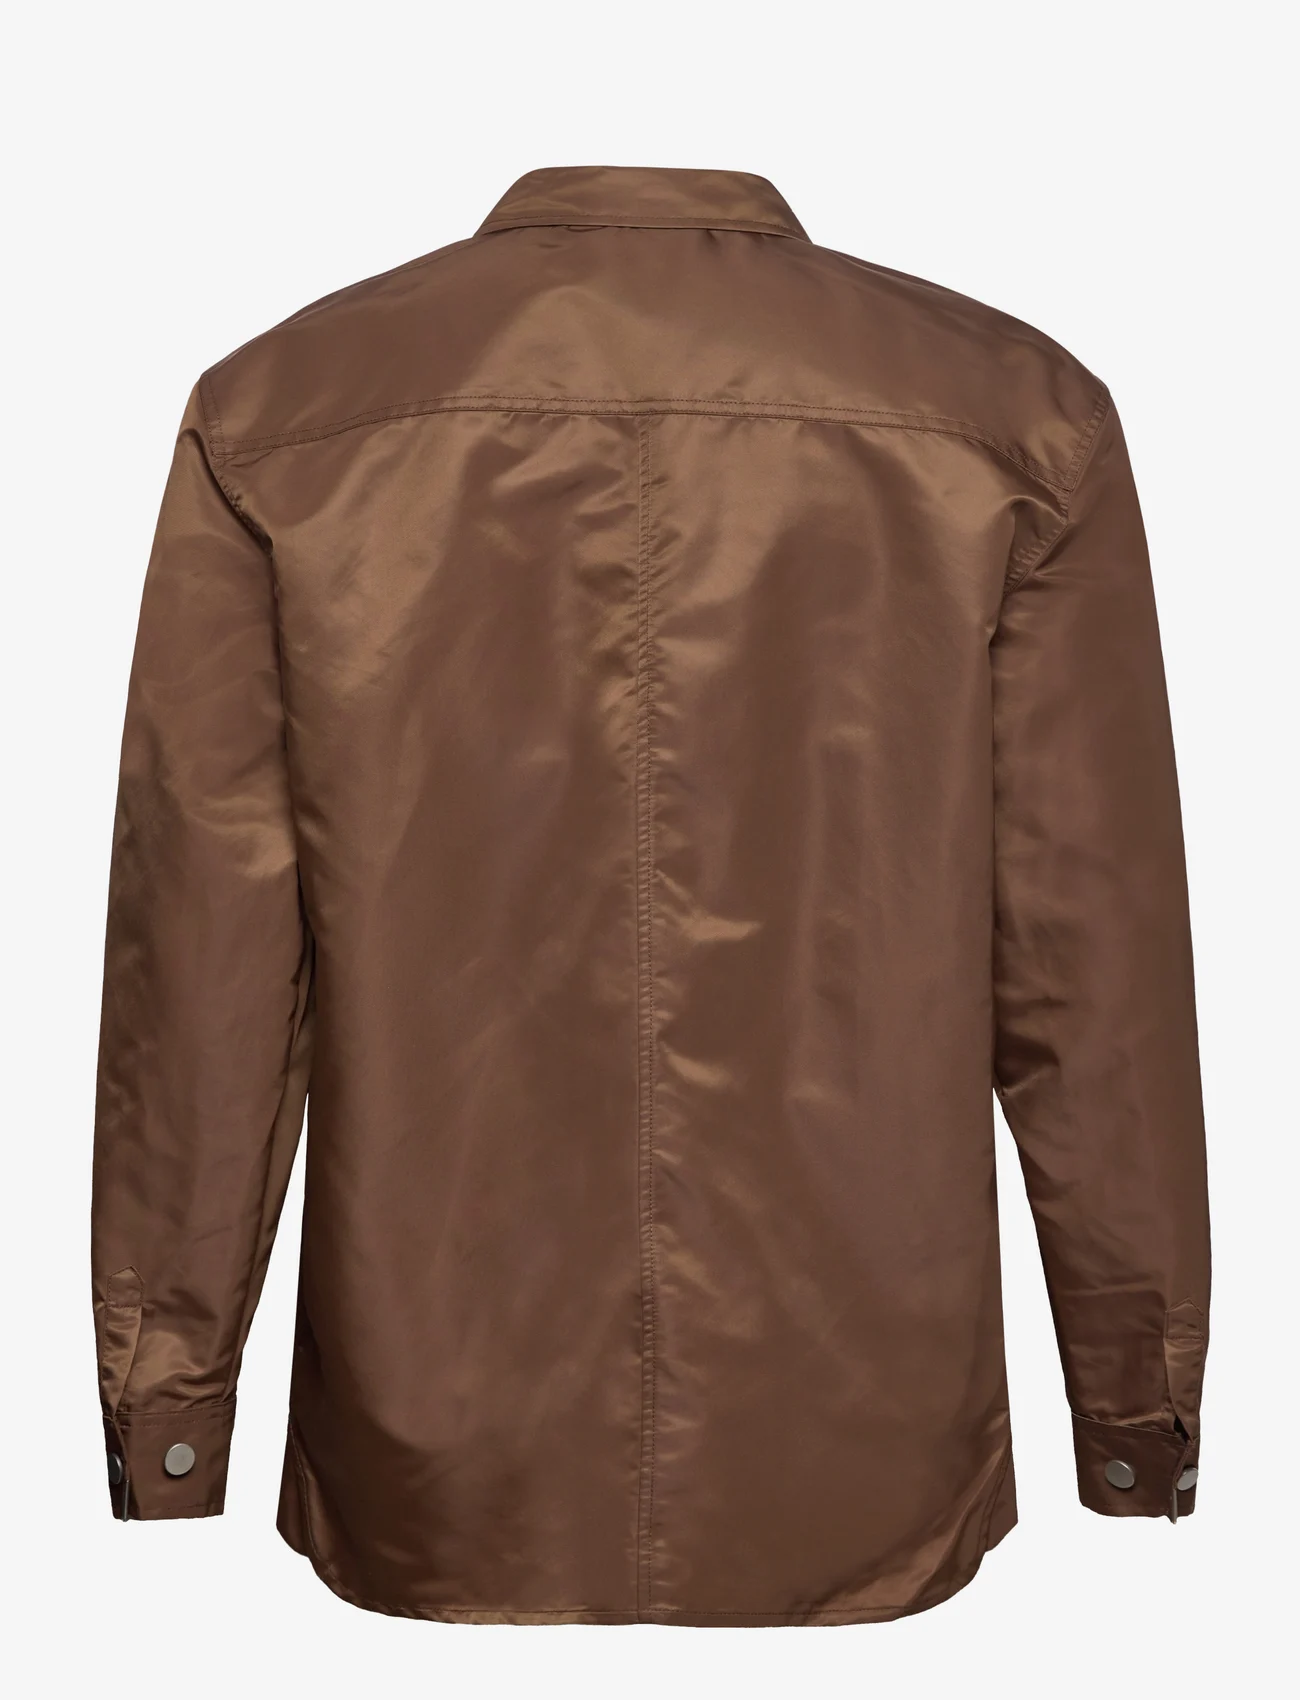 HAN Kjøbenhavn - Army Shirt - brown - 1